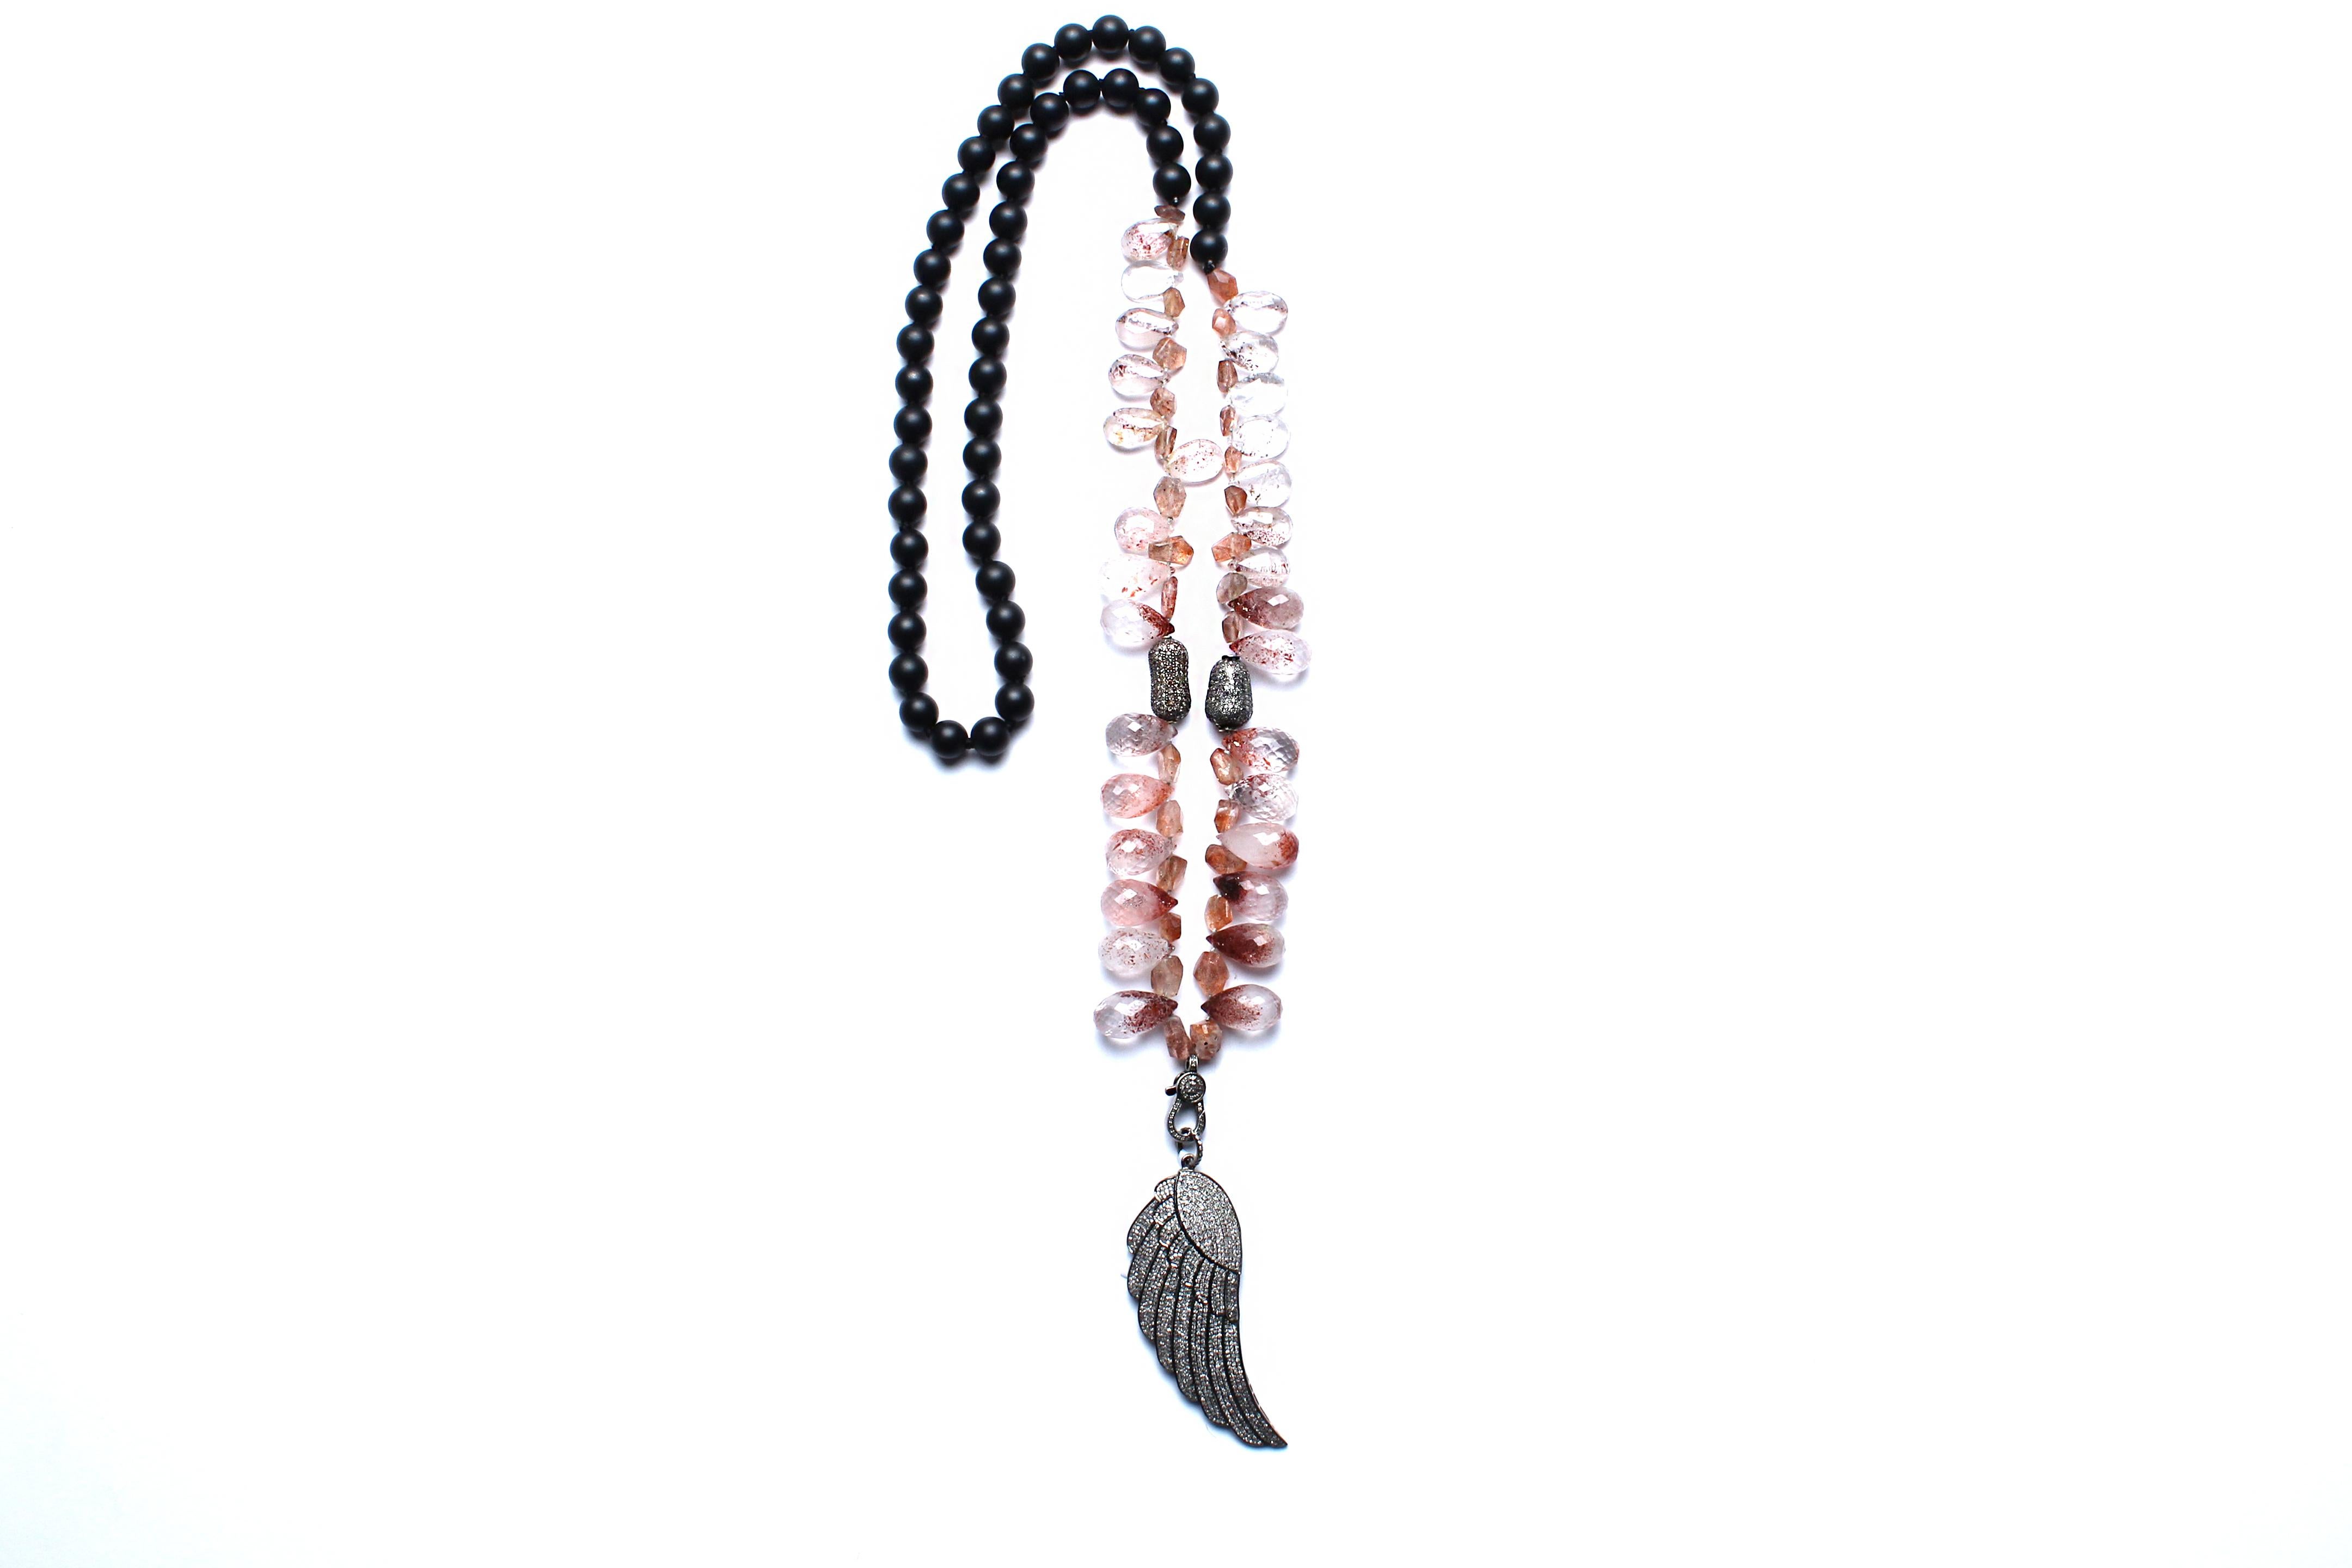 Contemporary Clarissa Bronfman Onyx, Rubellite, Diamond, Silver Angel Wing Necklace